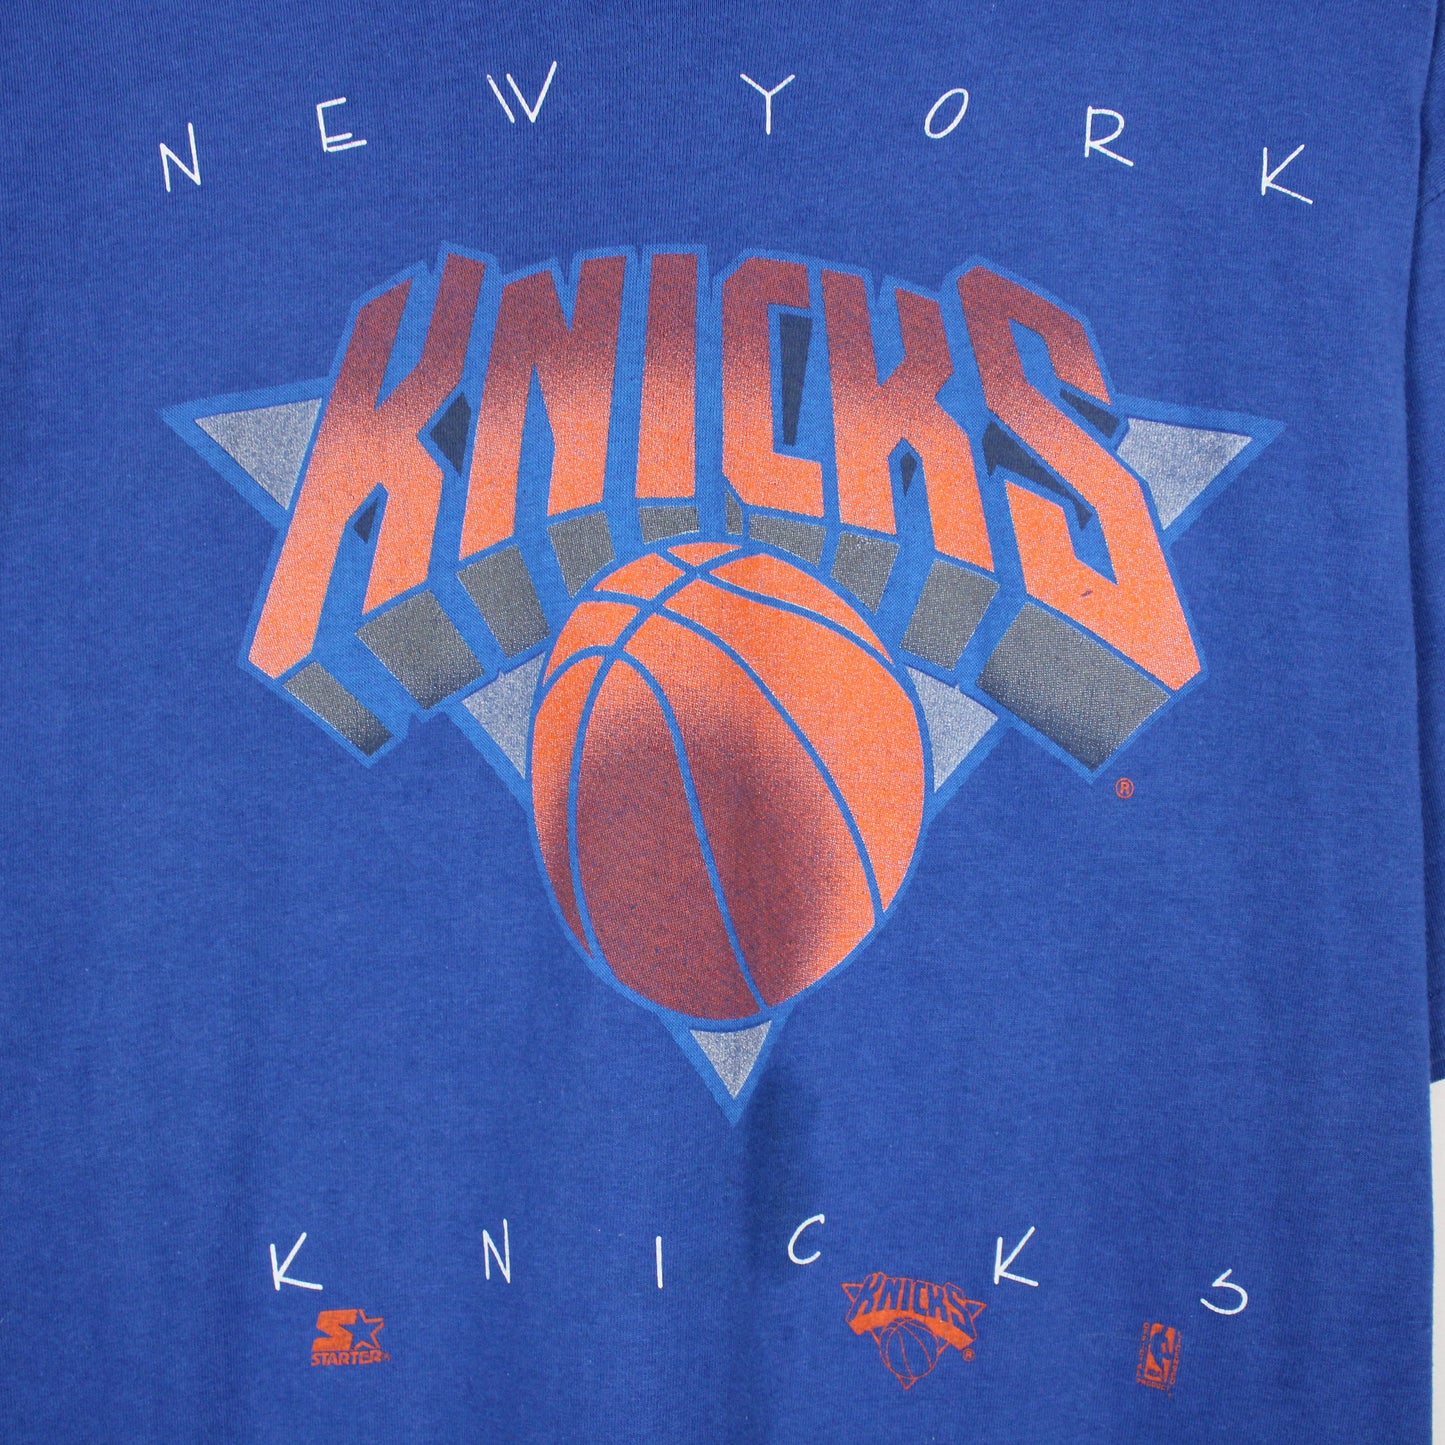 Vintage 1994 New York Knicks NBA Starter Tee - XL